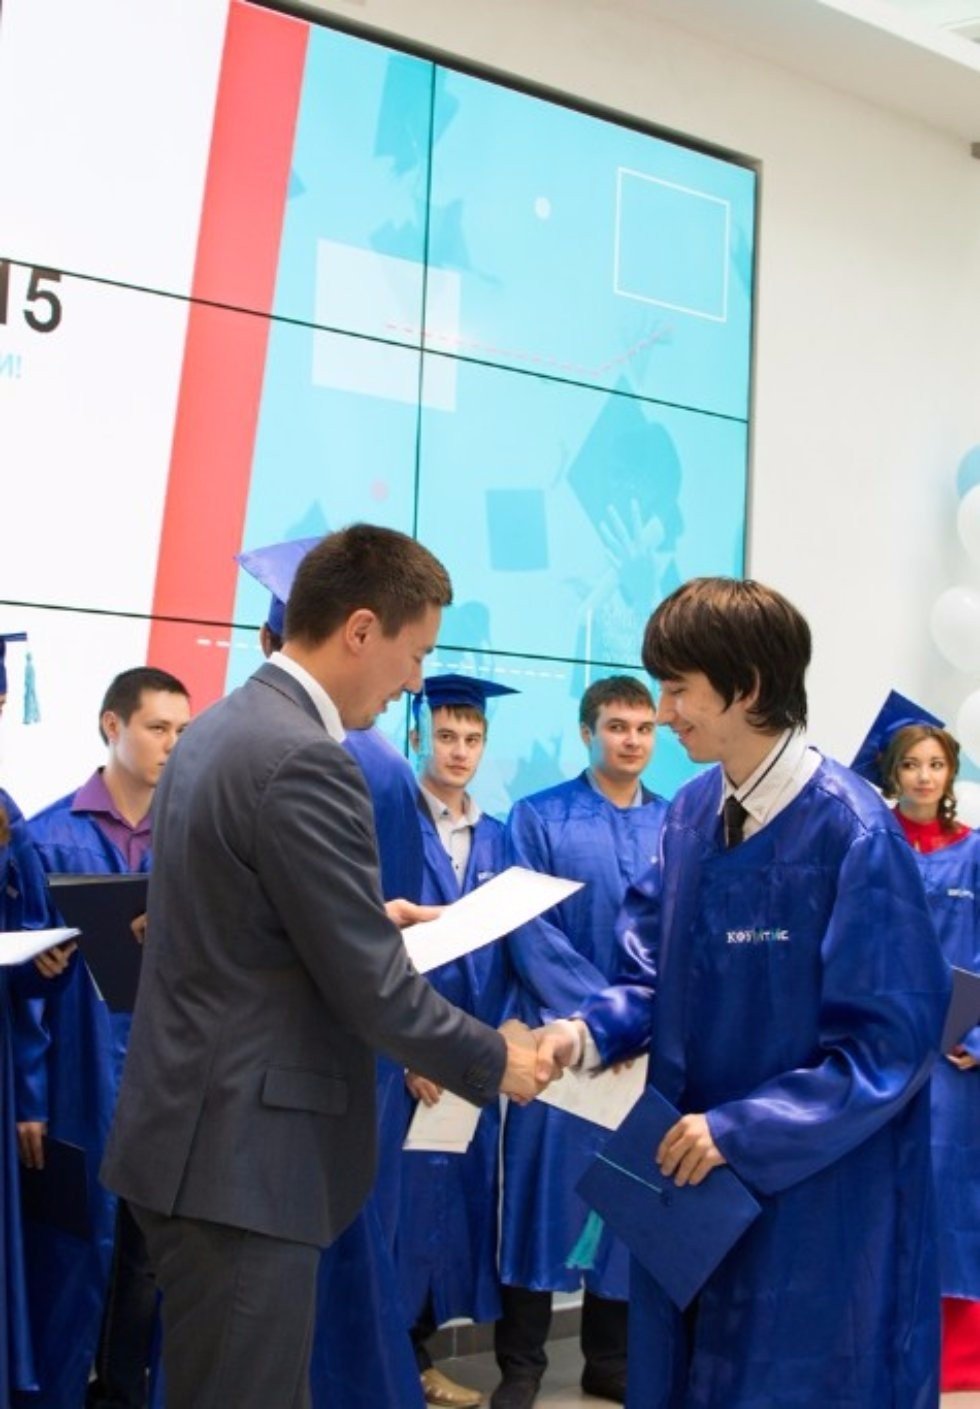 #ITISPROM2015 - We did it! ,Kazan (Volga region) Federal University, Kazan University, ITIS, diplomas, Roman Aleksandrovich Shaikhutdinov, Anton Grachev, ceremony, first graduates,